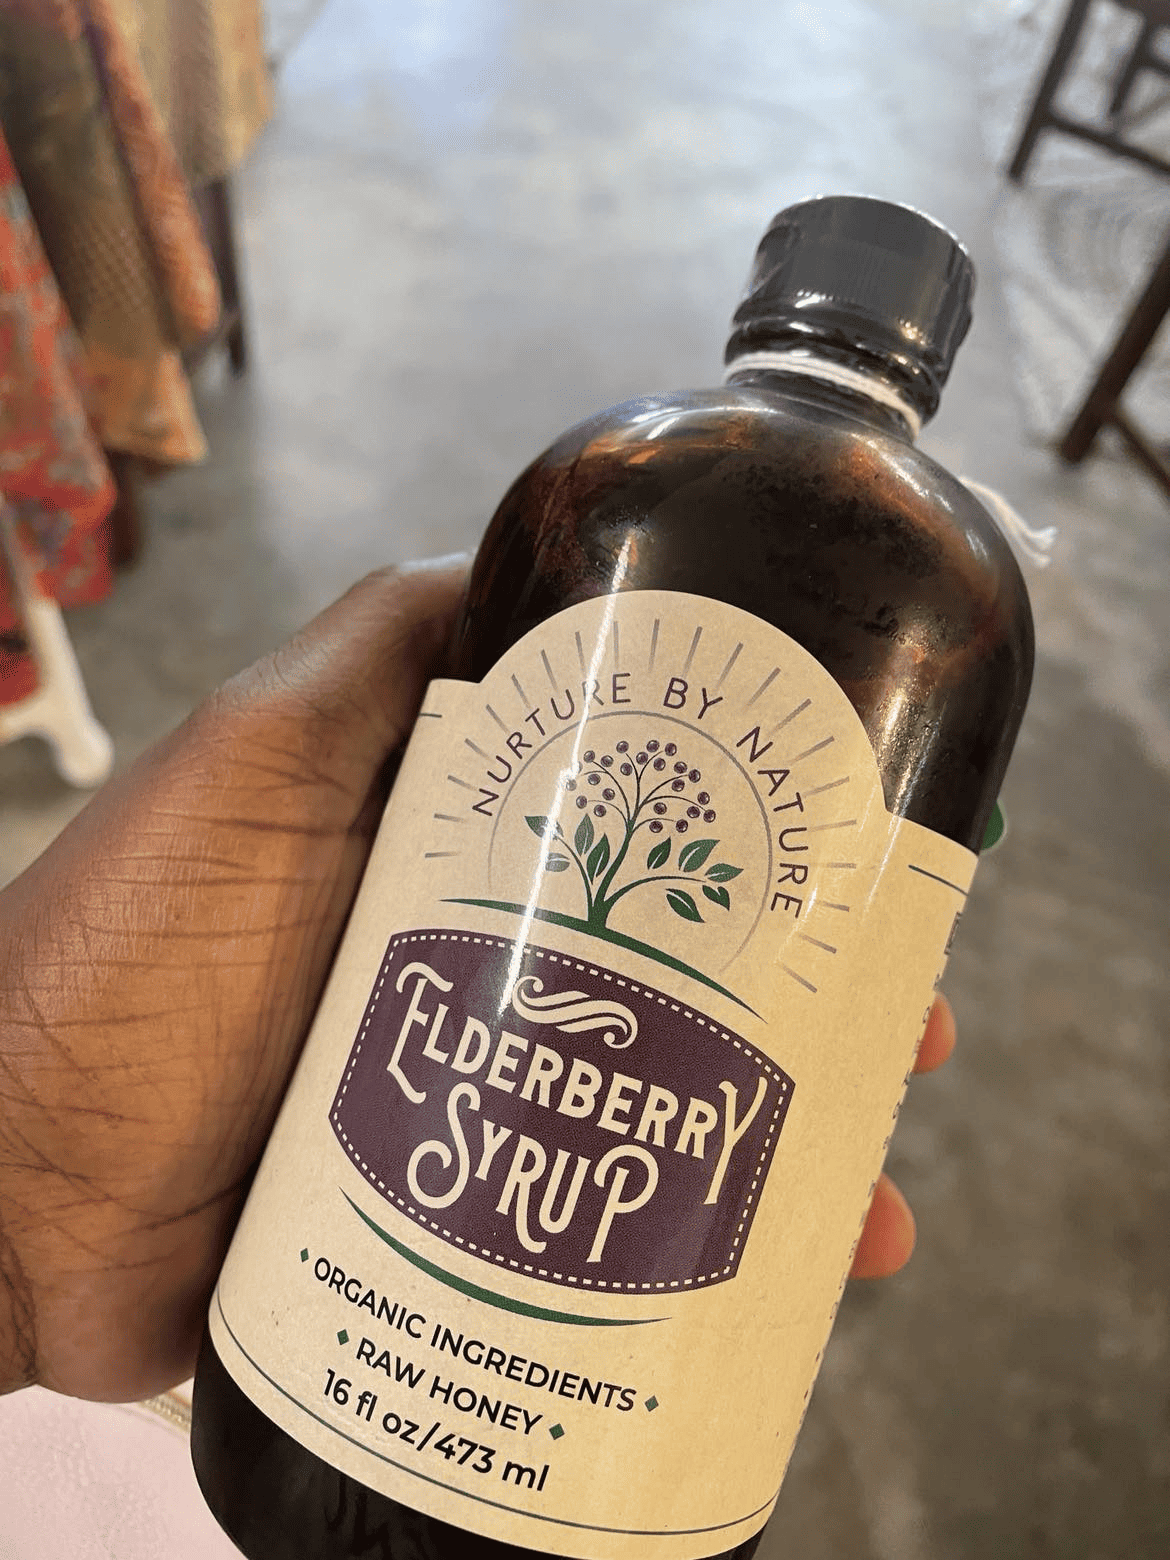 Elderberry syrup